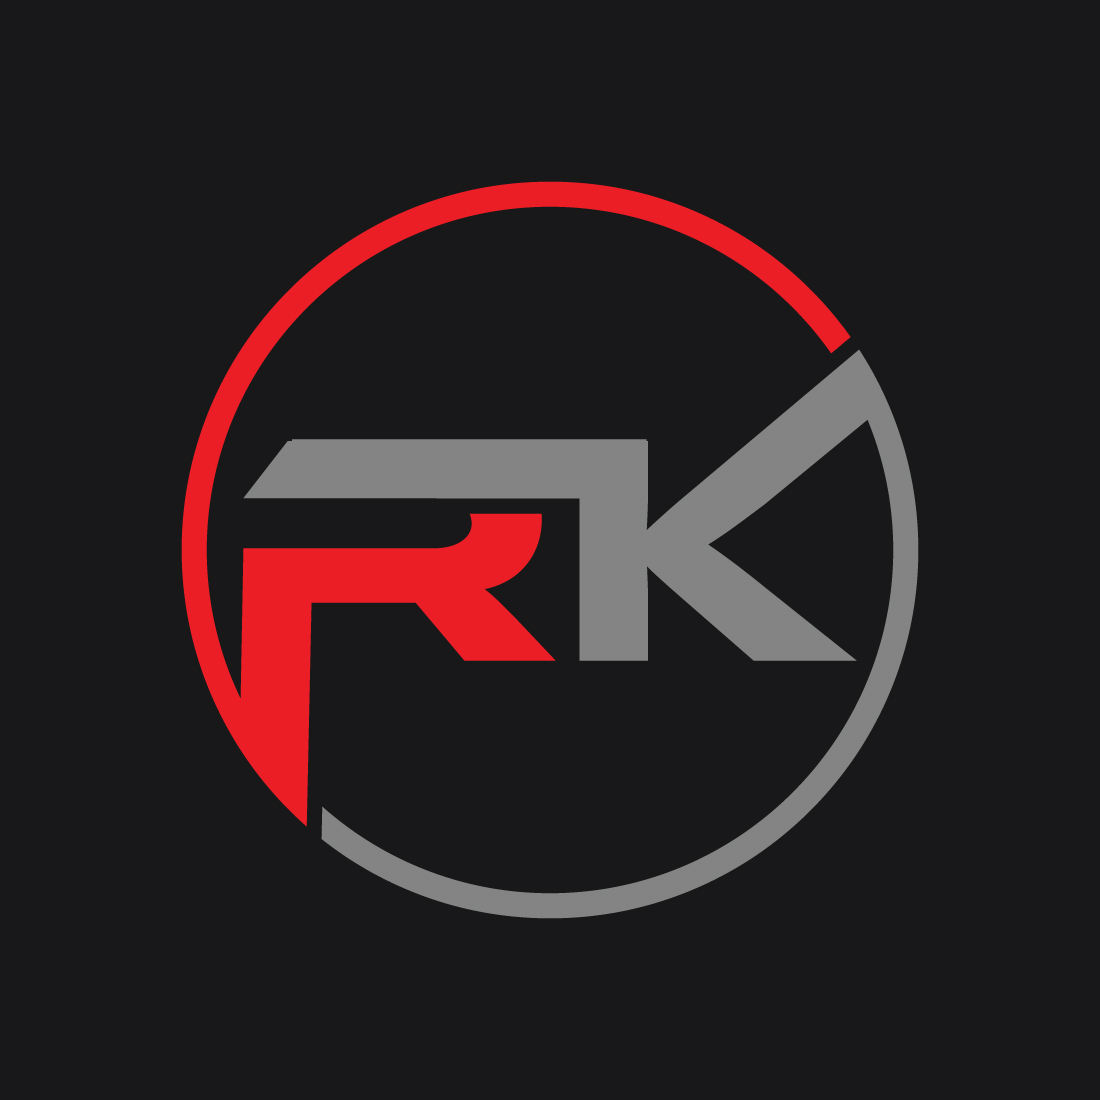 Circle RK letter logo template design cover image.